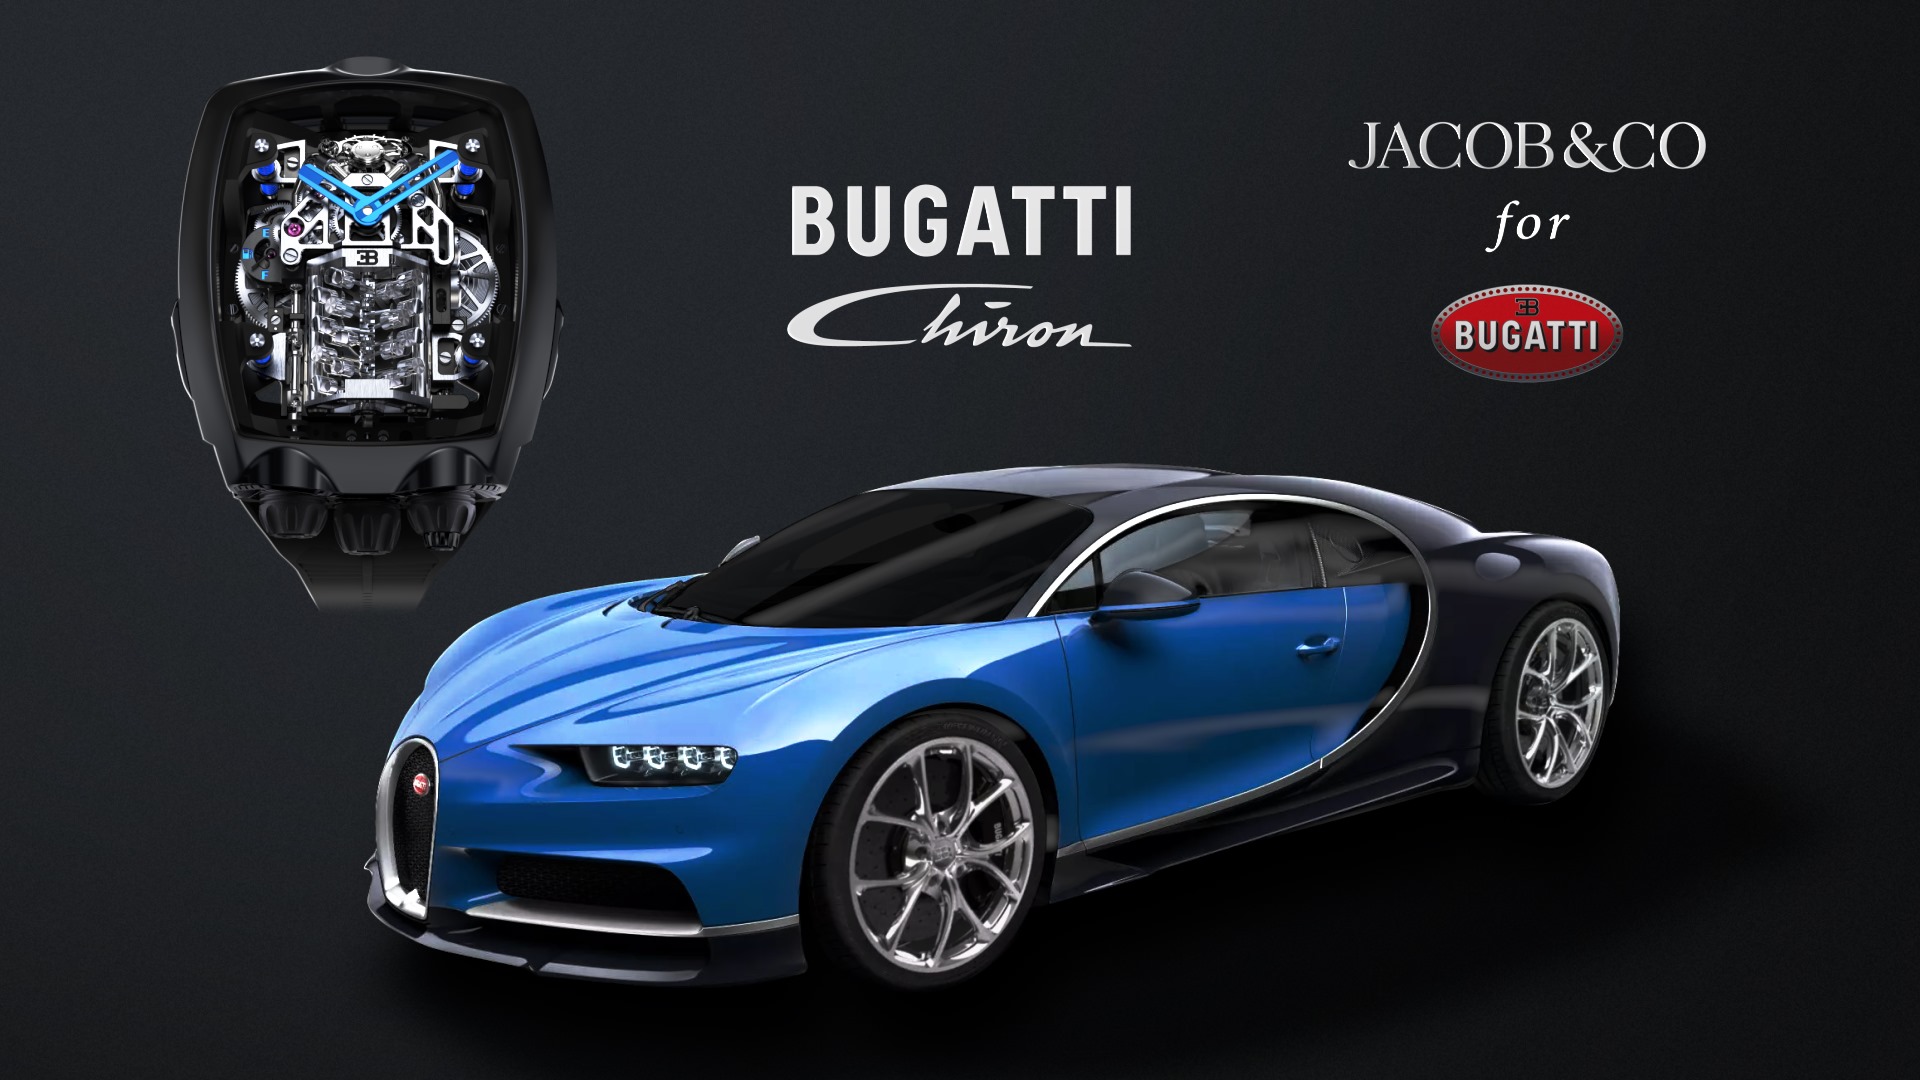 Bugatti'nin W16 motorunu içinde barındıran 1.9 milyon TL'lik kol saati: Bugatti Chiron Tourbillon